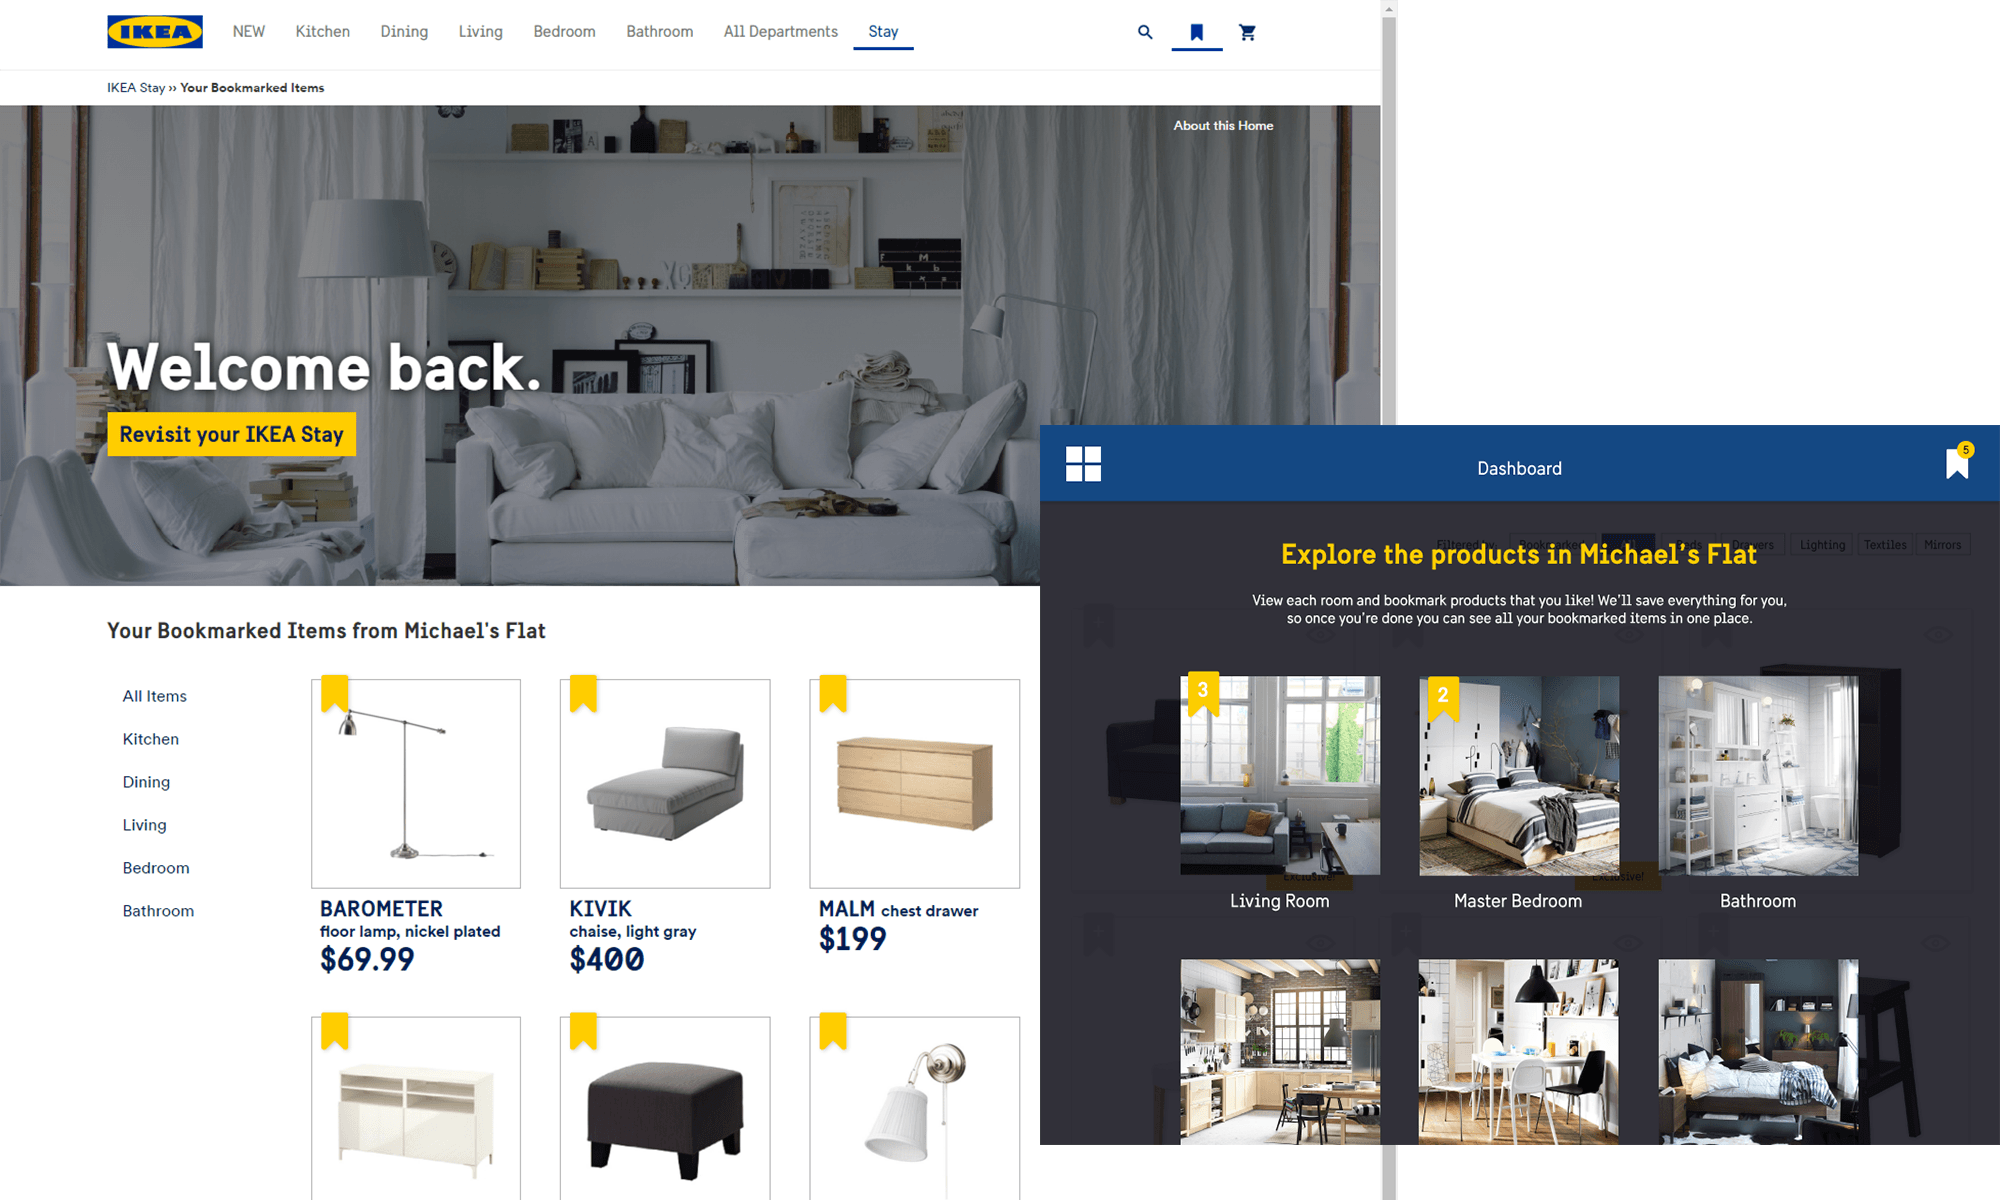 Screens of IKEA Stay